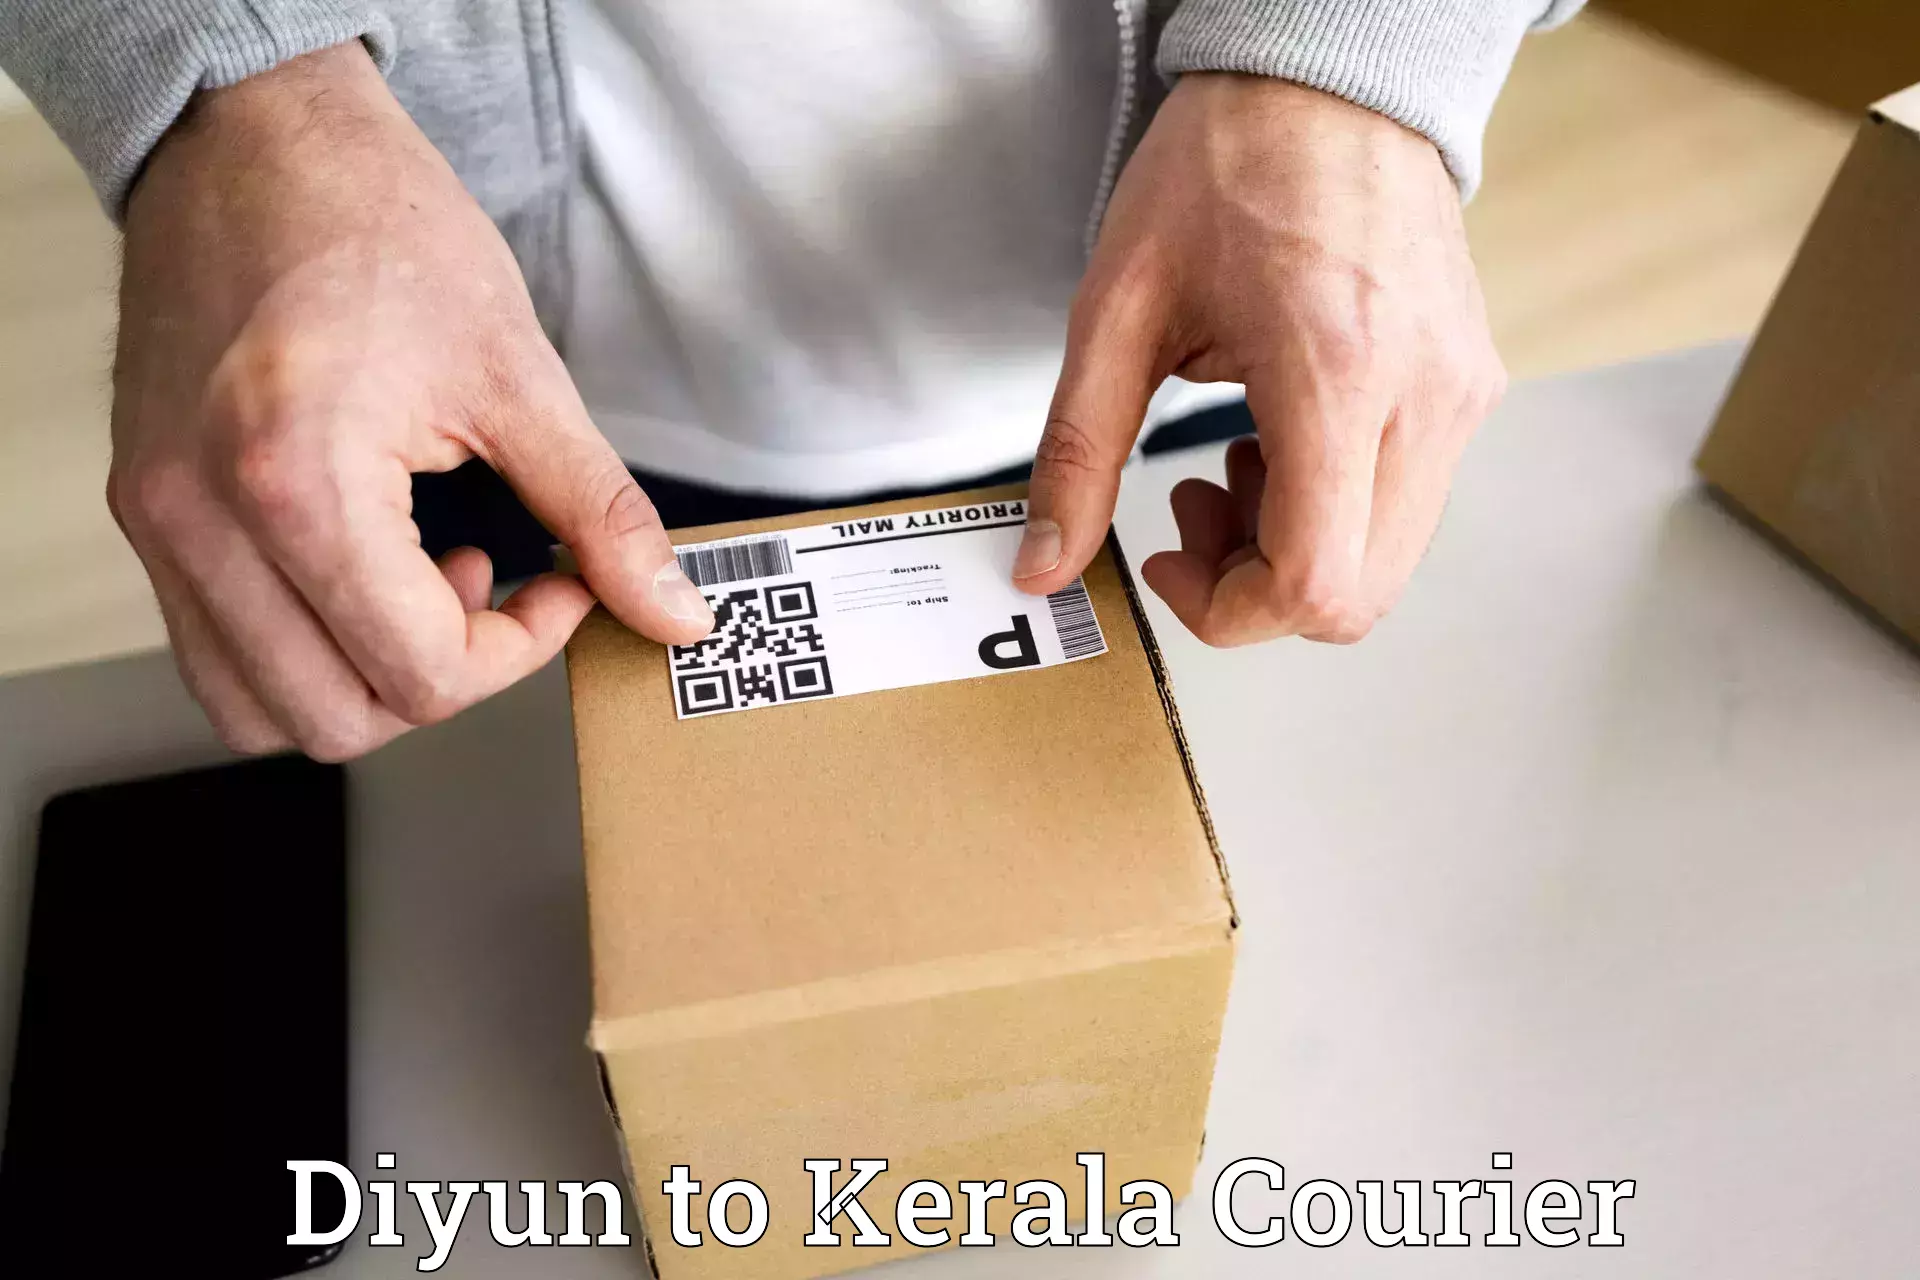 International parcel service Diyun to Kozhikode